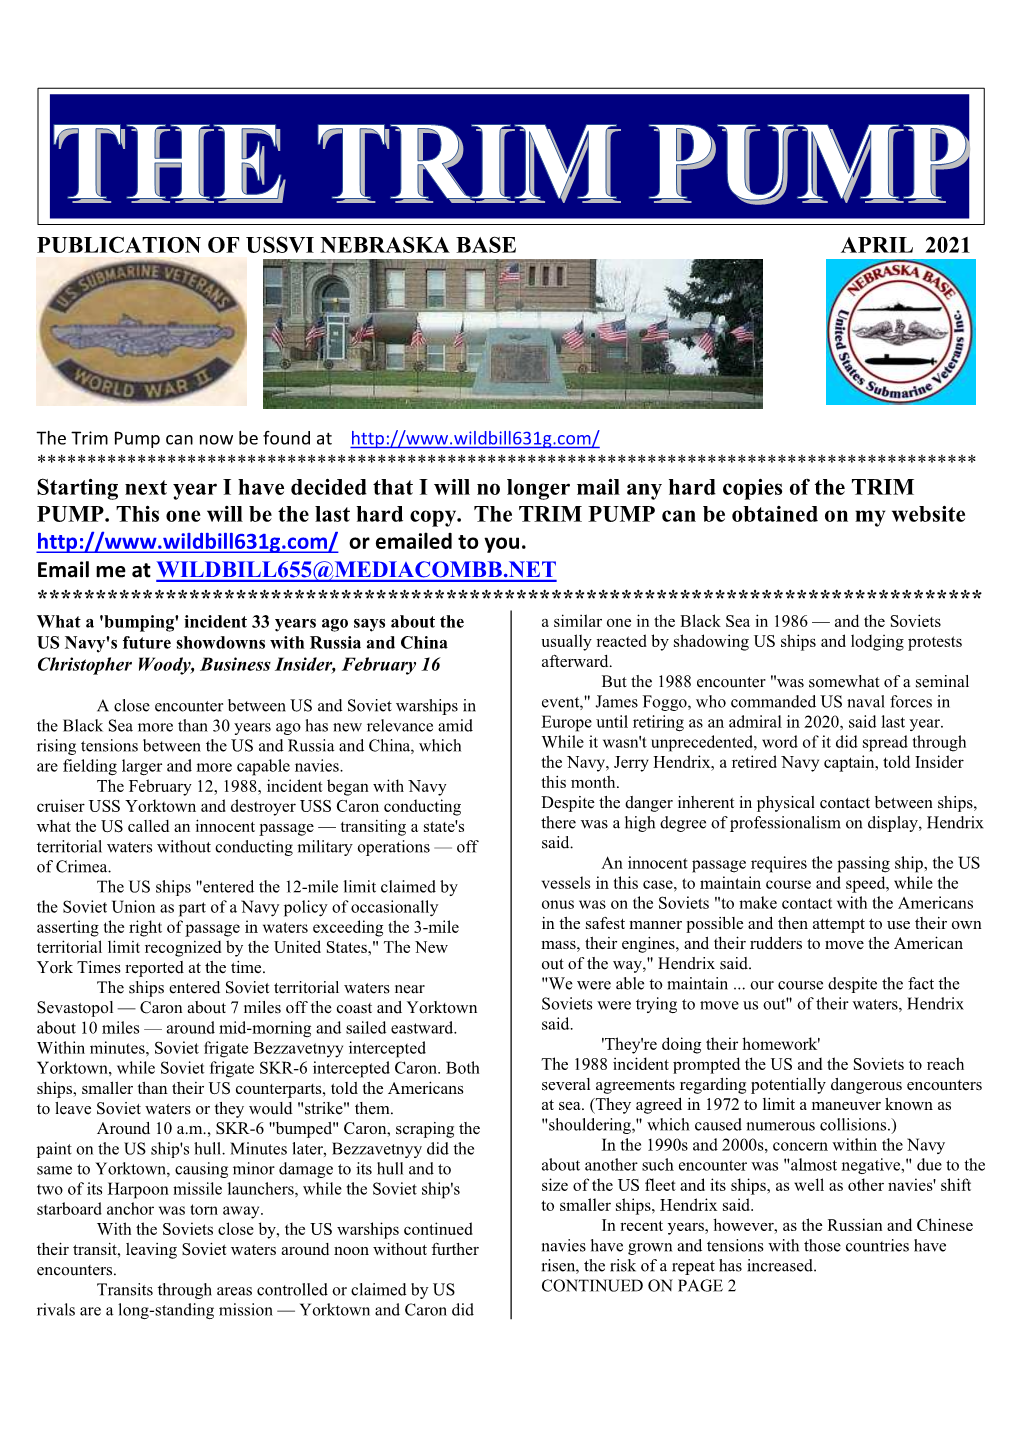 The Trim Pump Publication of Ussvi Nebraska Base April 2021